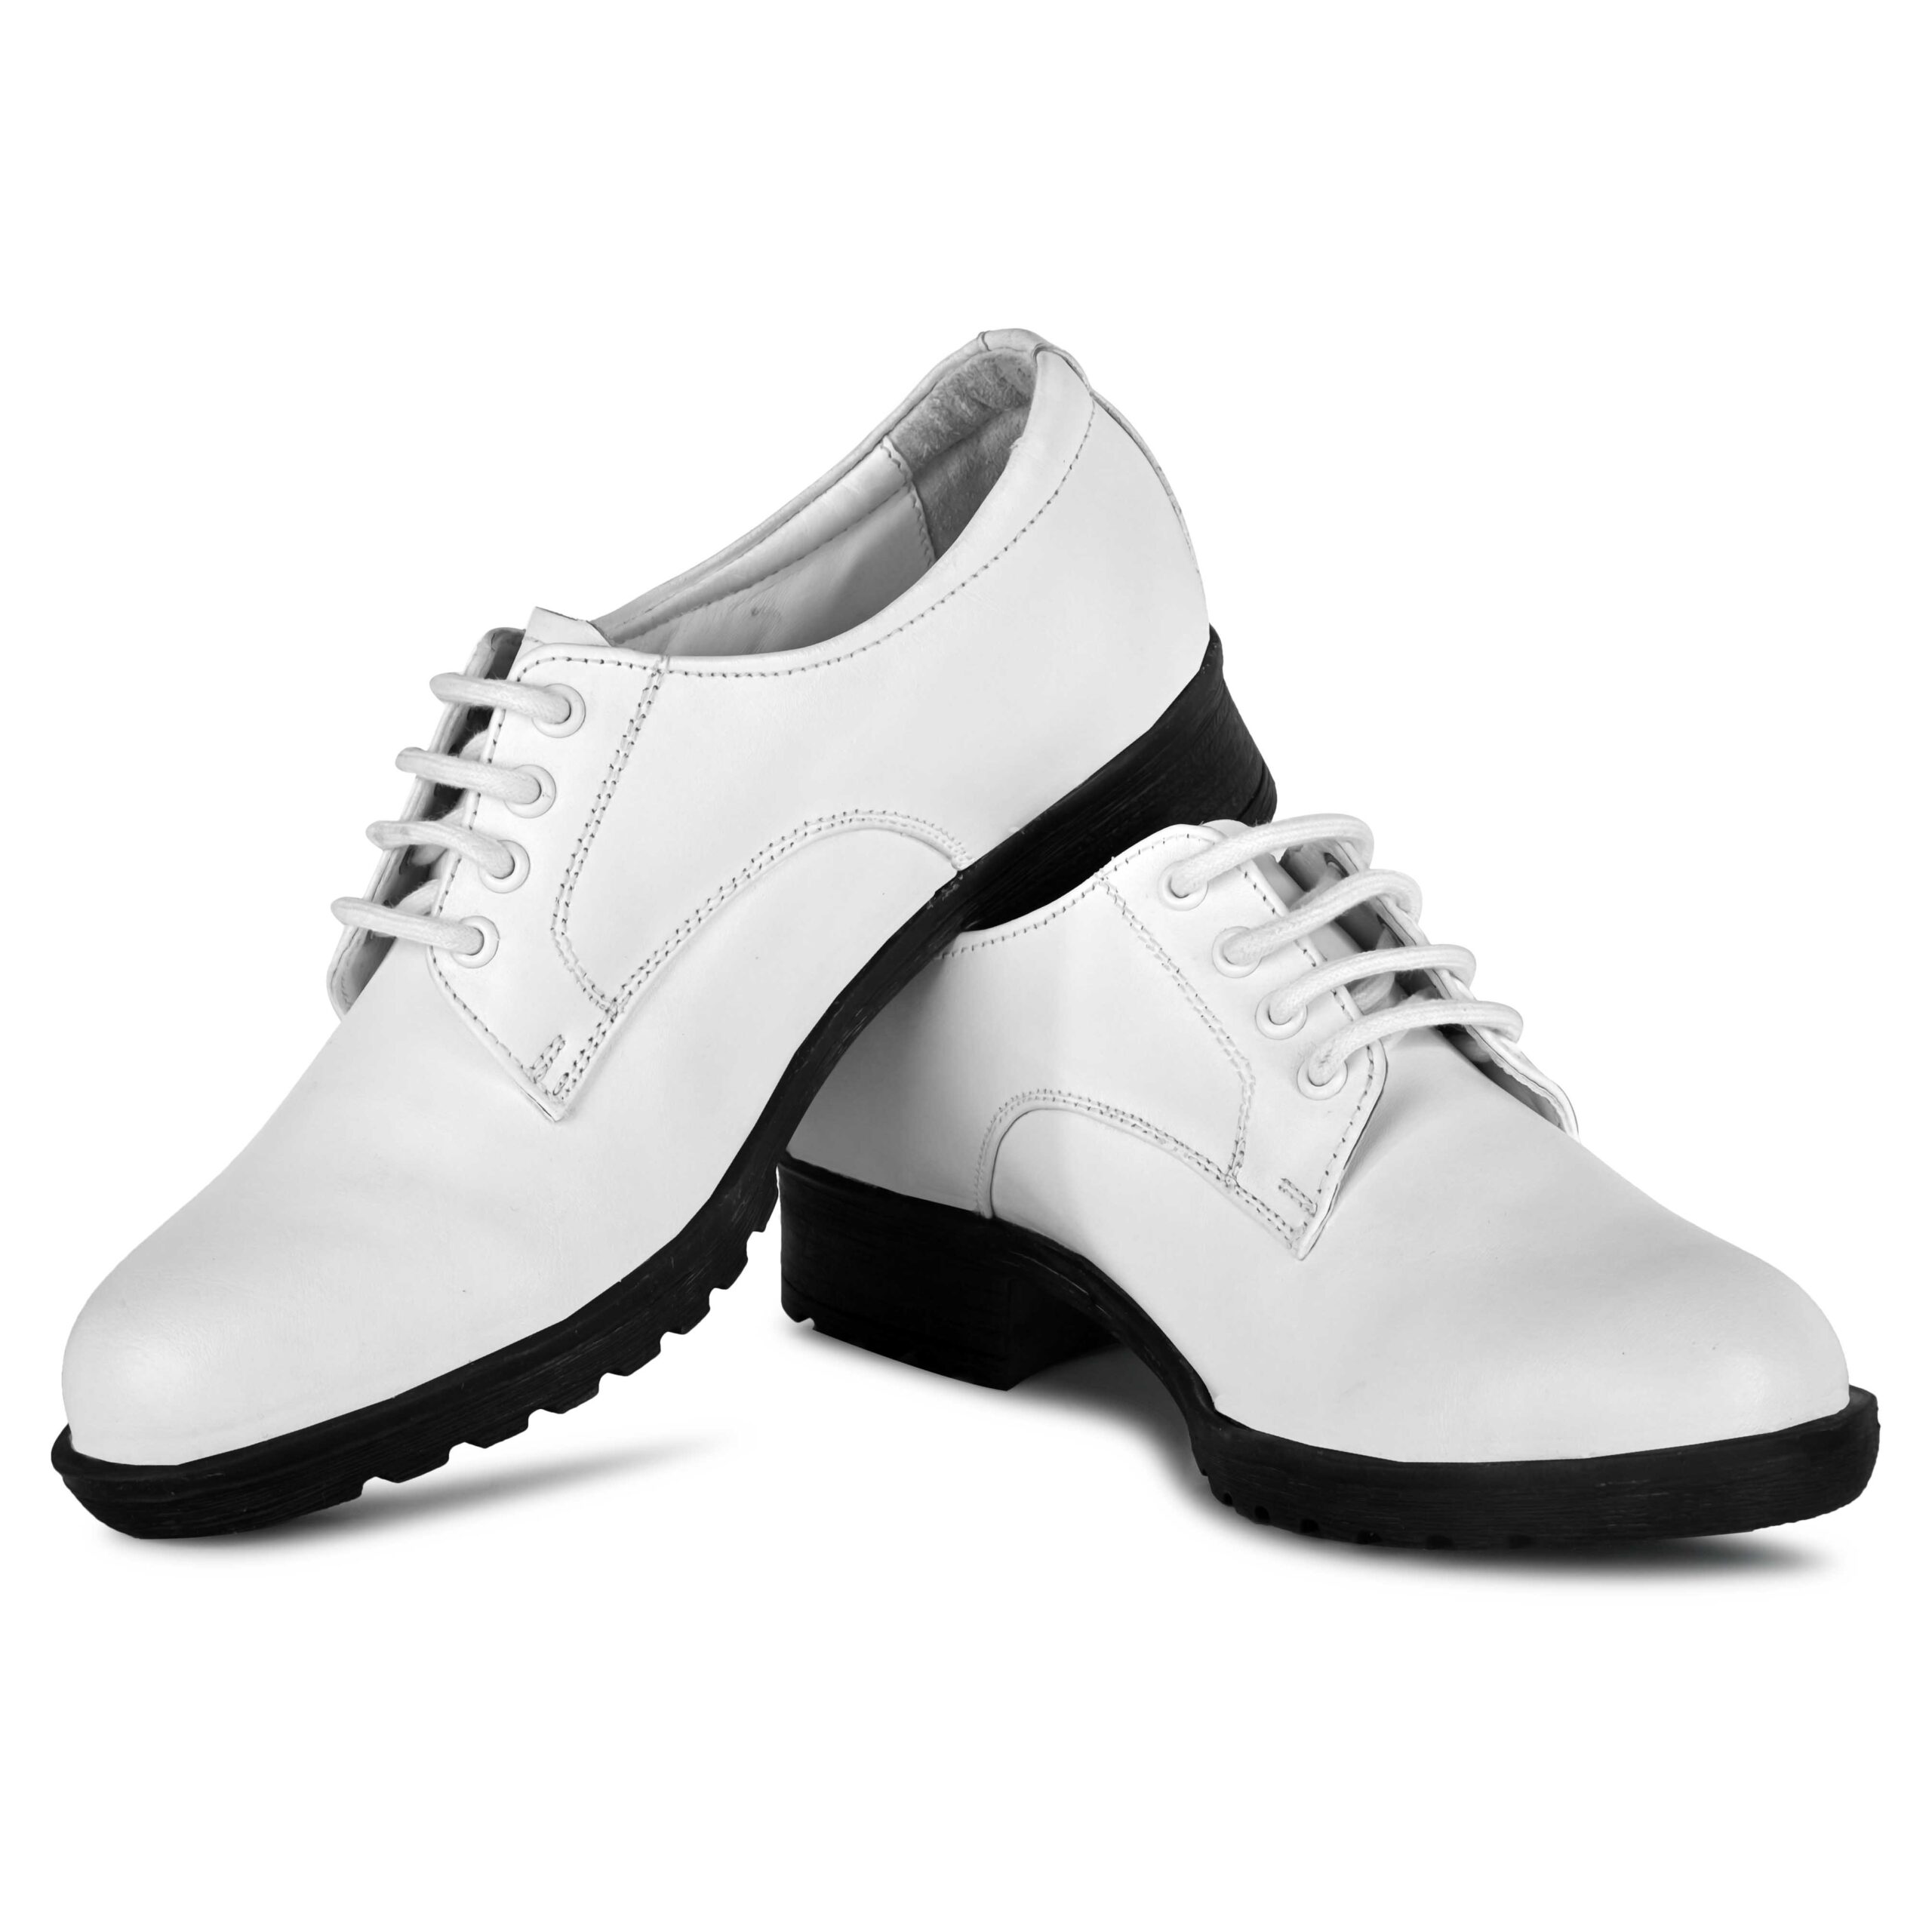 horex women navy uniform shoes white